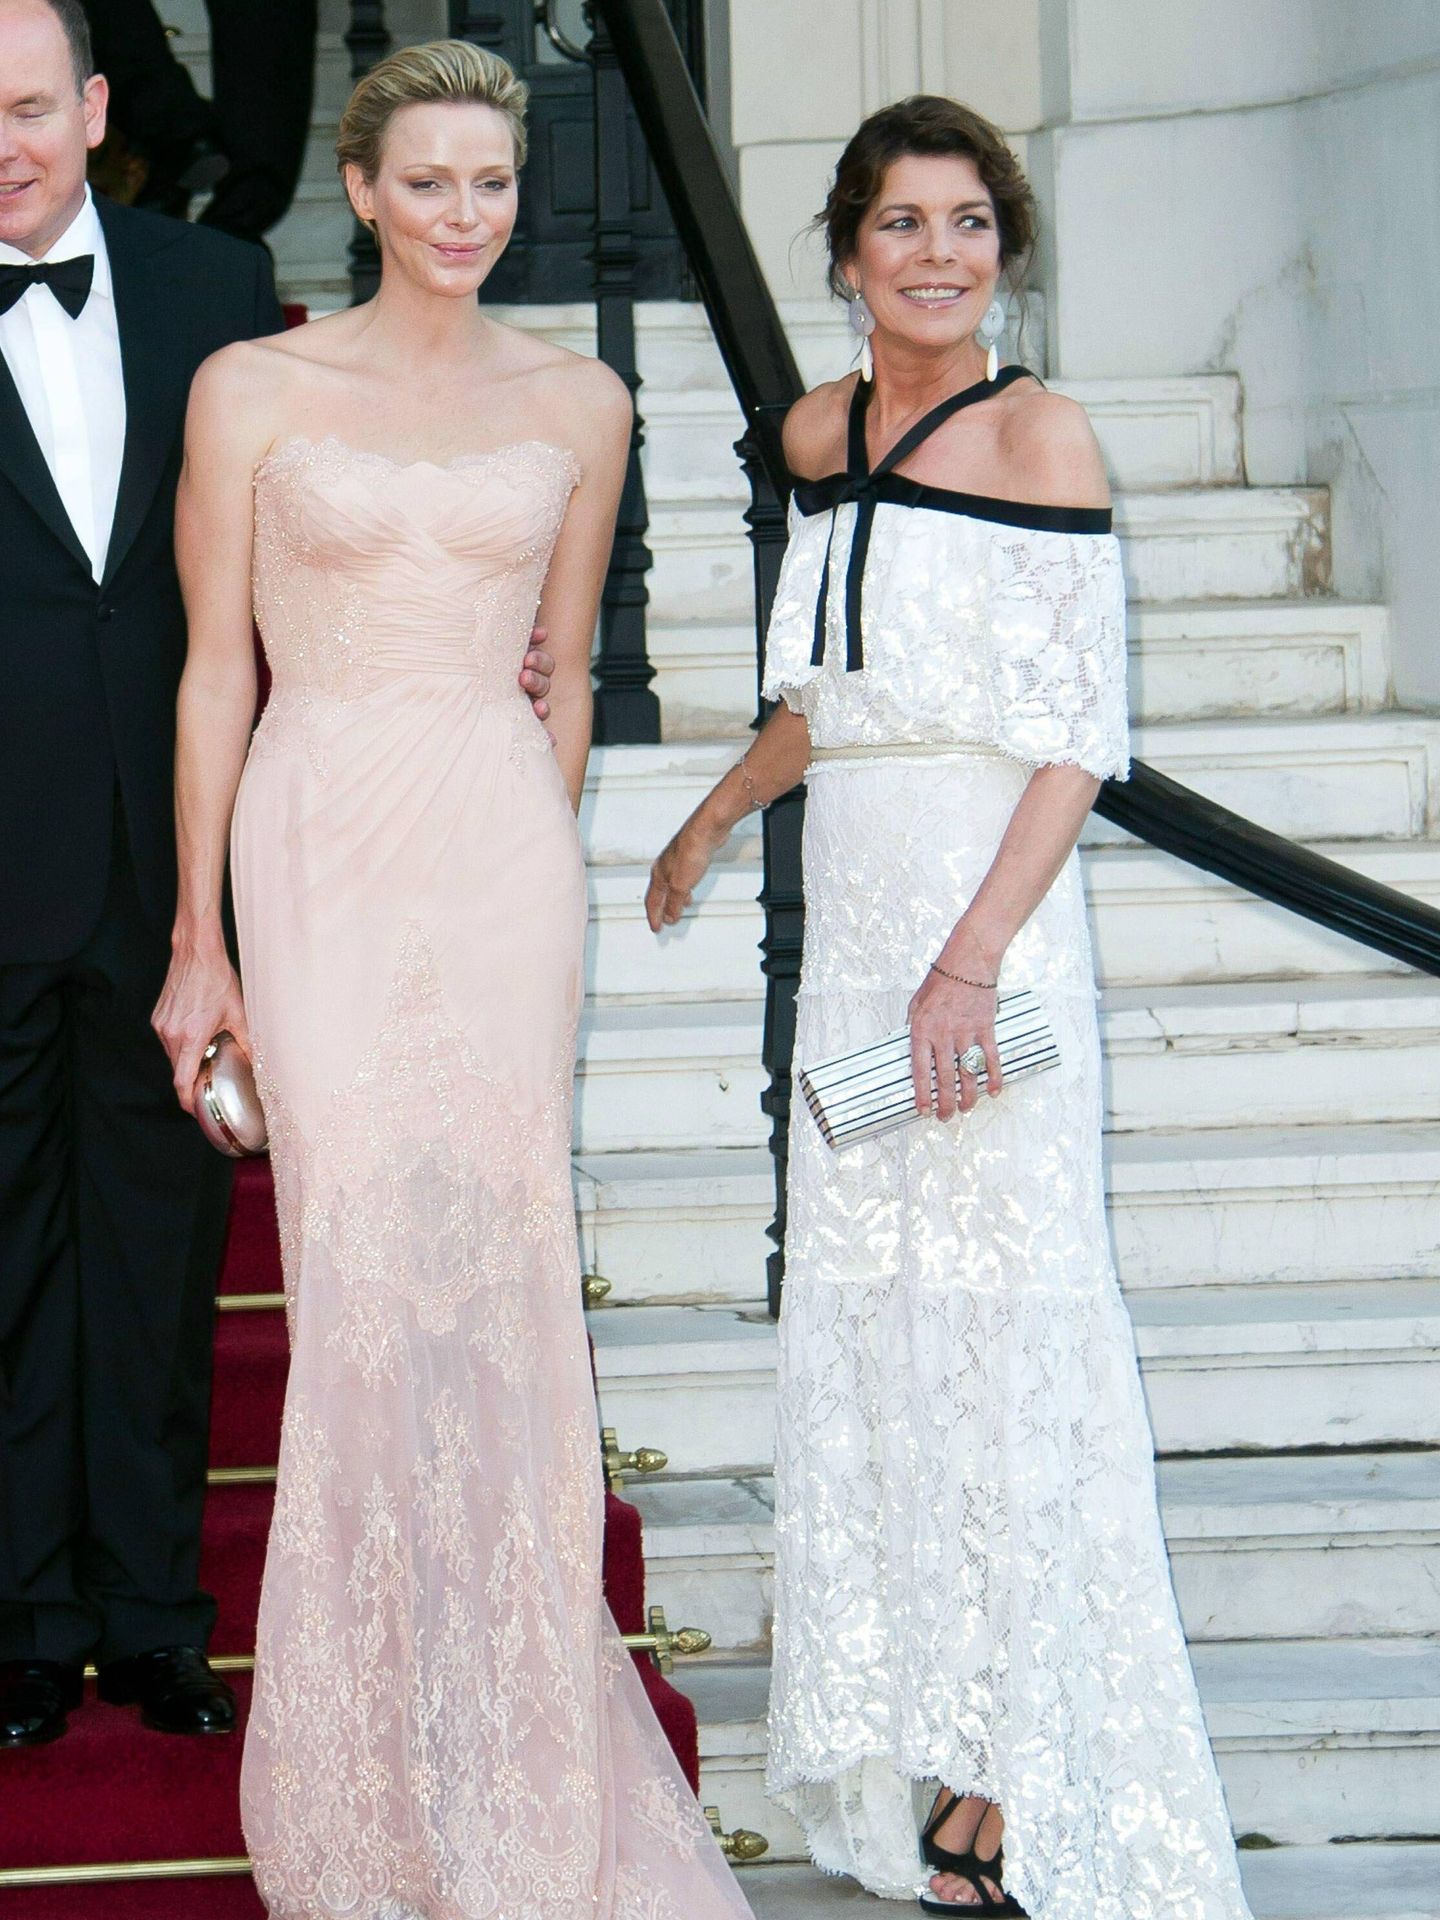 Carolina de Mónaco con vestido blanco y detalle de lazo en la gala 'Love Ball'.  (Cordon Press)